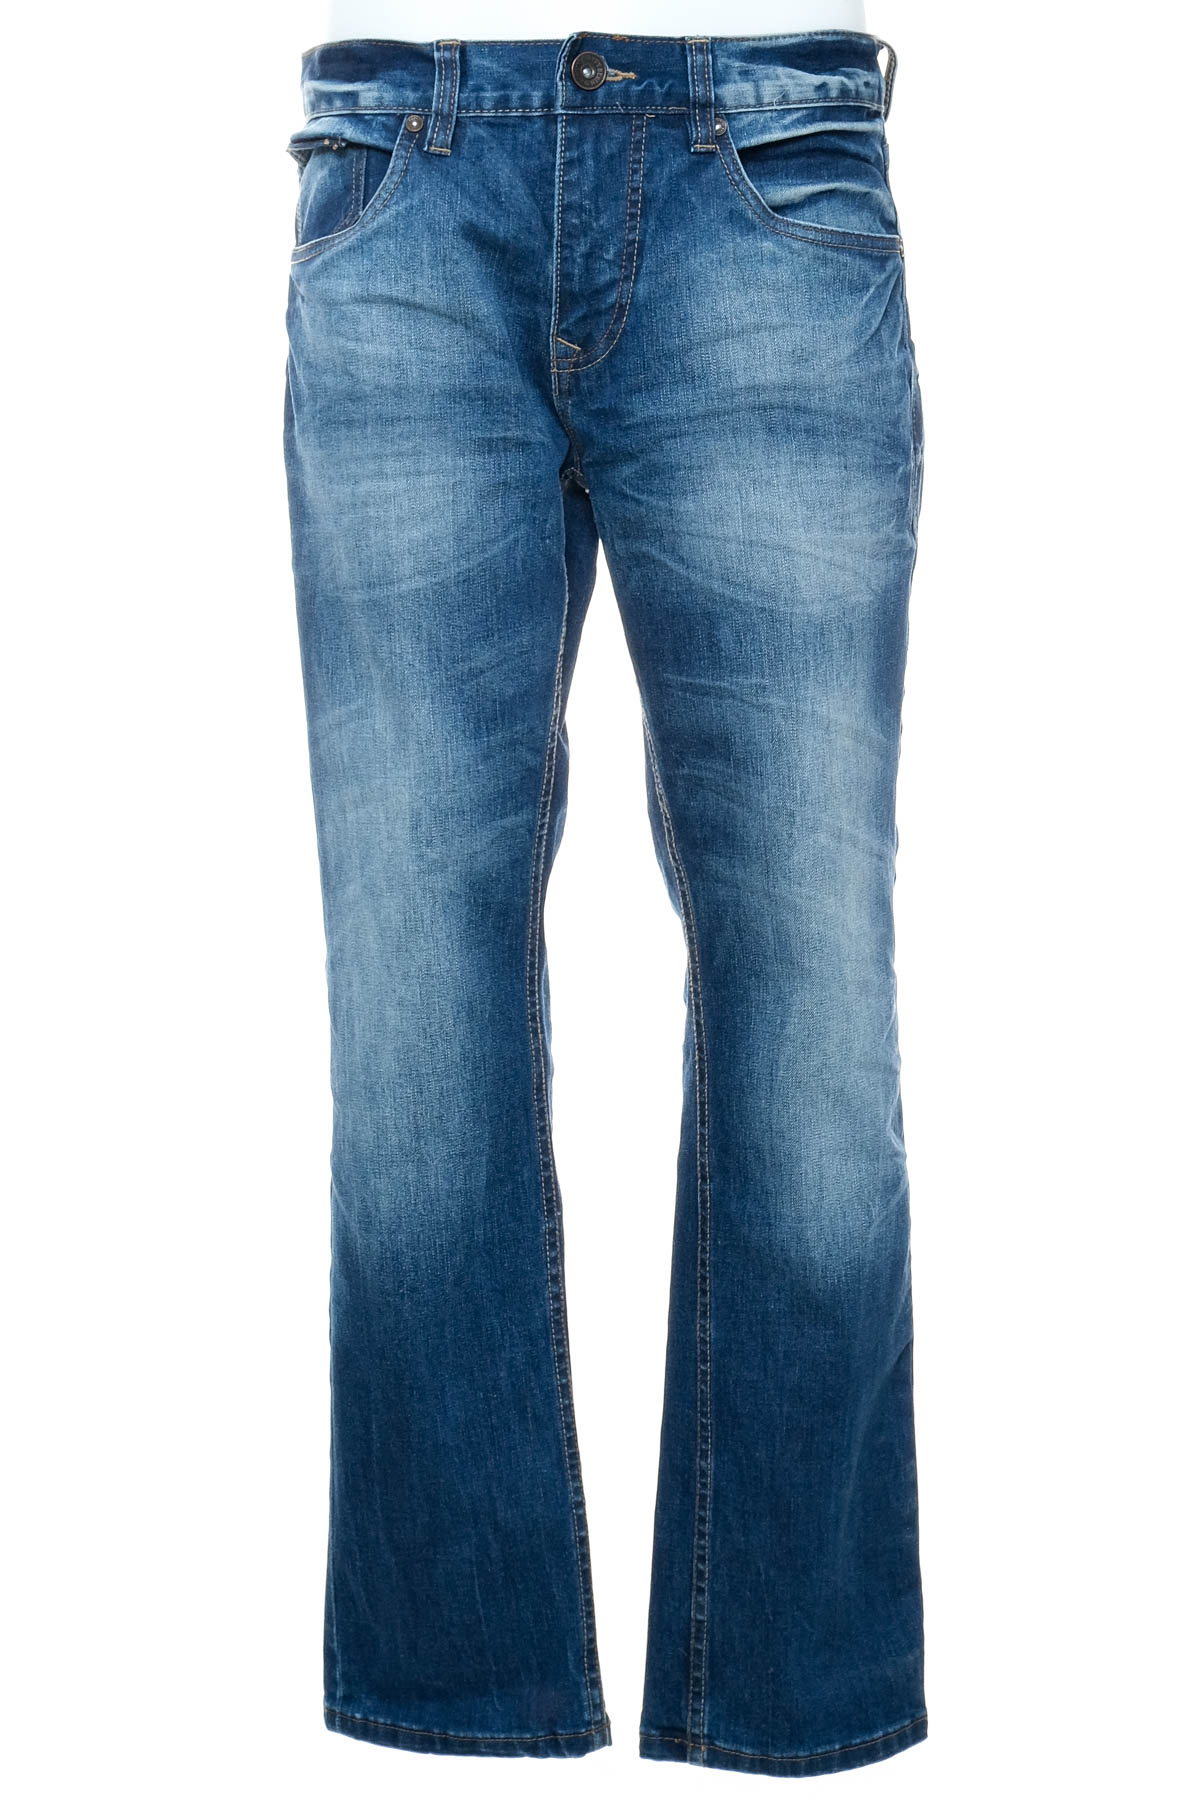 Men's jeans - SAVVY Denim - 0